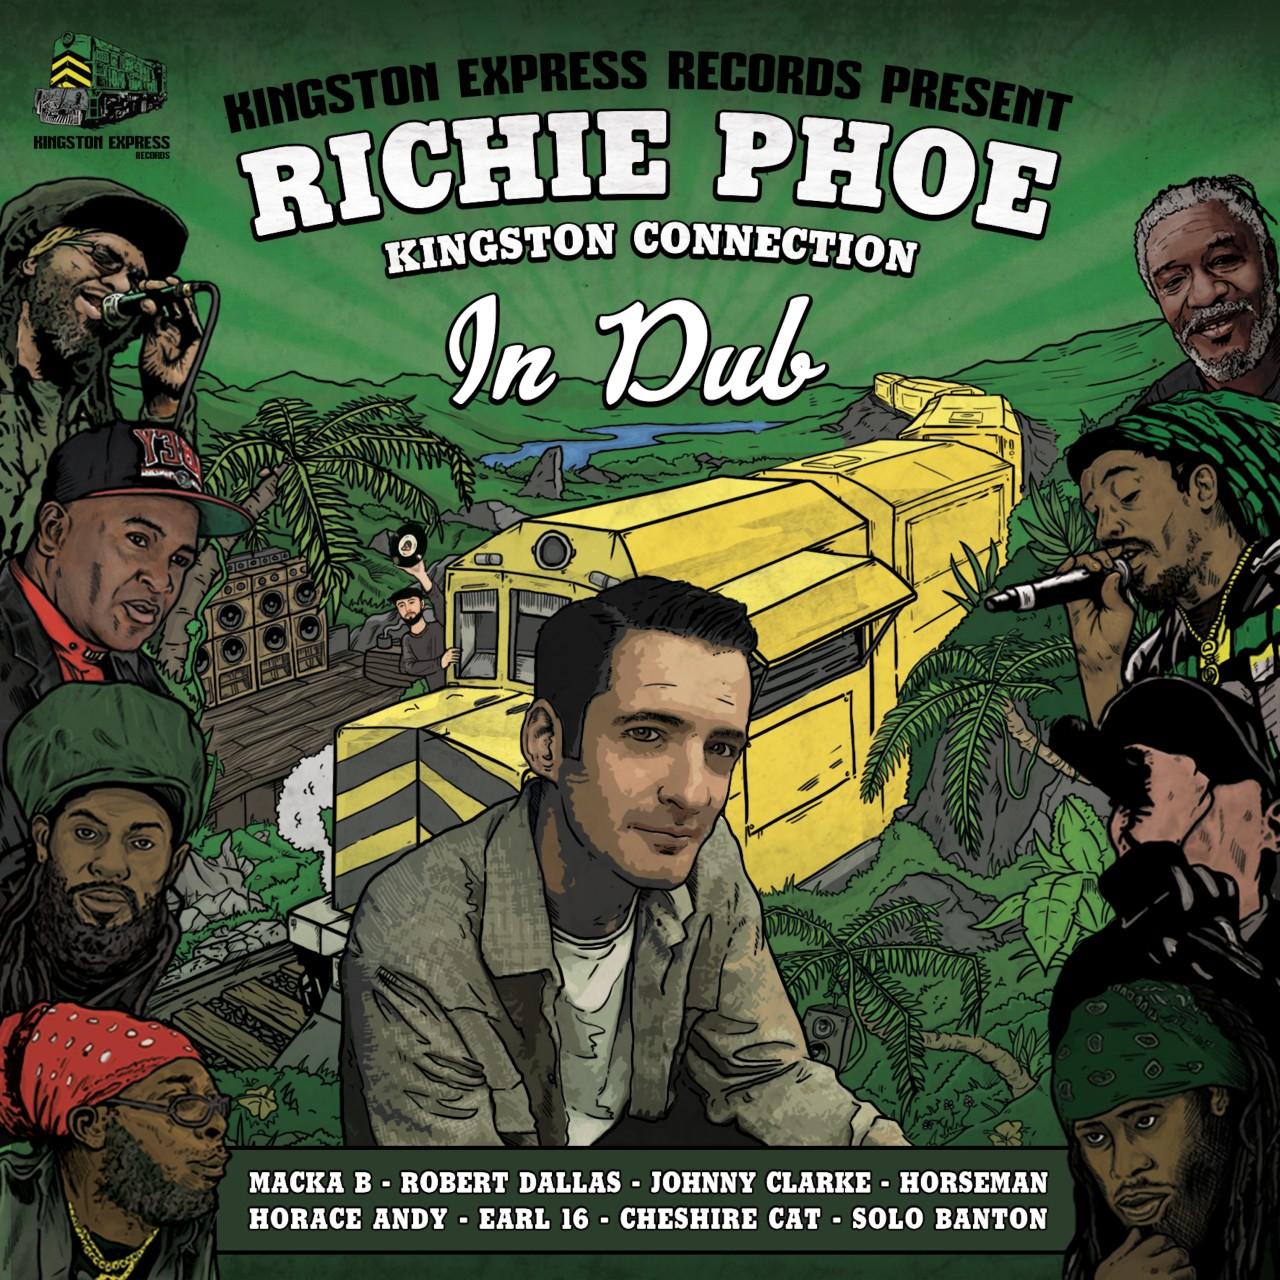 UbuntuFM Reggae | Richie Phoe | “Kingston Connection In Dub”